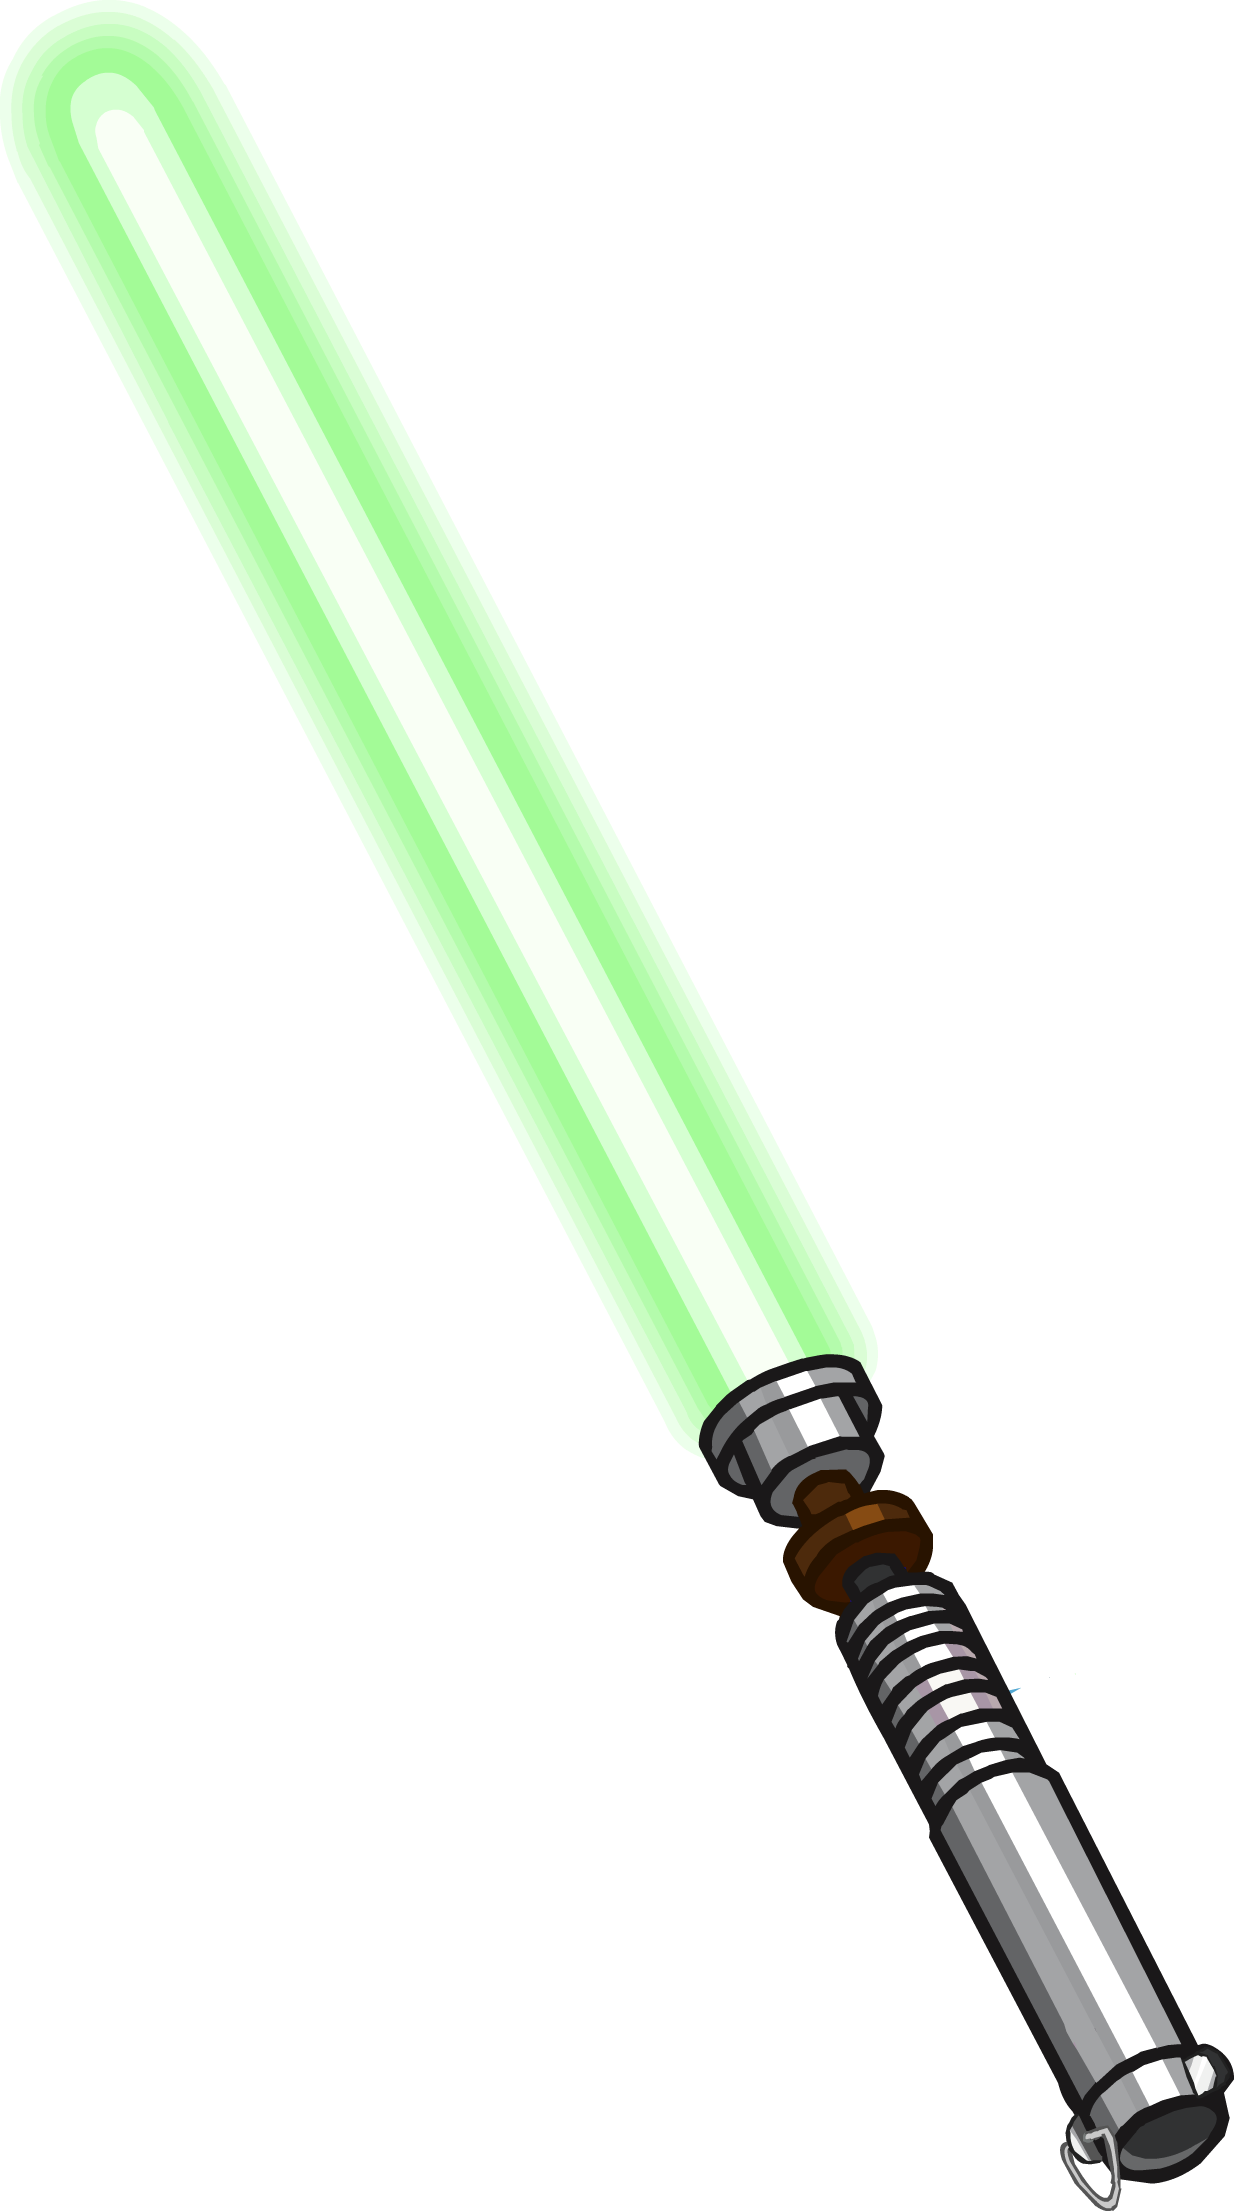 Luke Skywalker Obi-wan Kenobi Anakin Skywalker Yoda - Luke Skywalker Obi-wan Kenobi Anakin Skywalker Yoda (1234x2211)